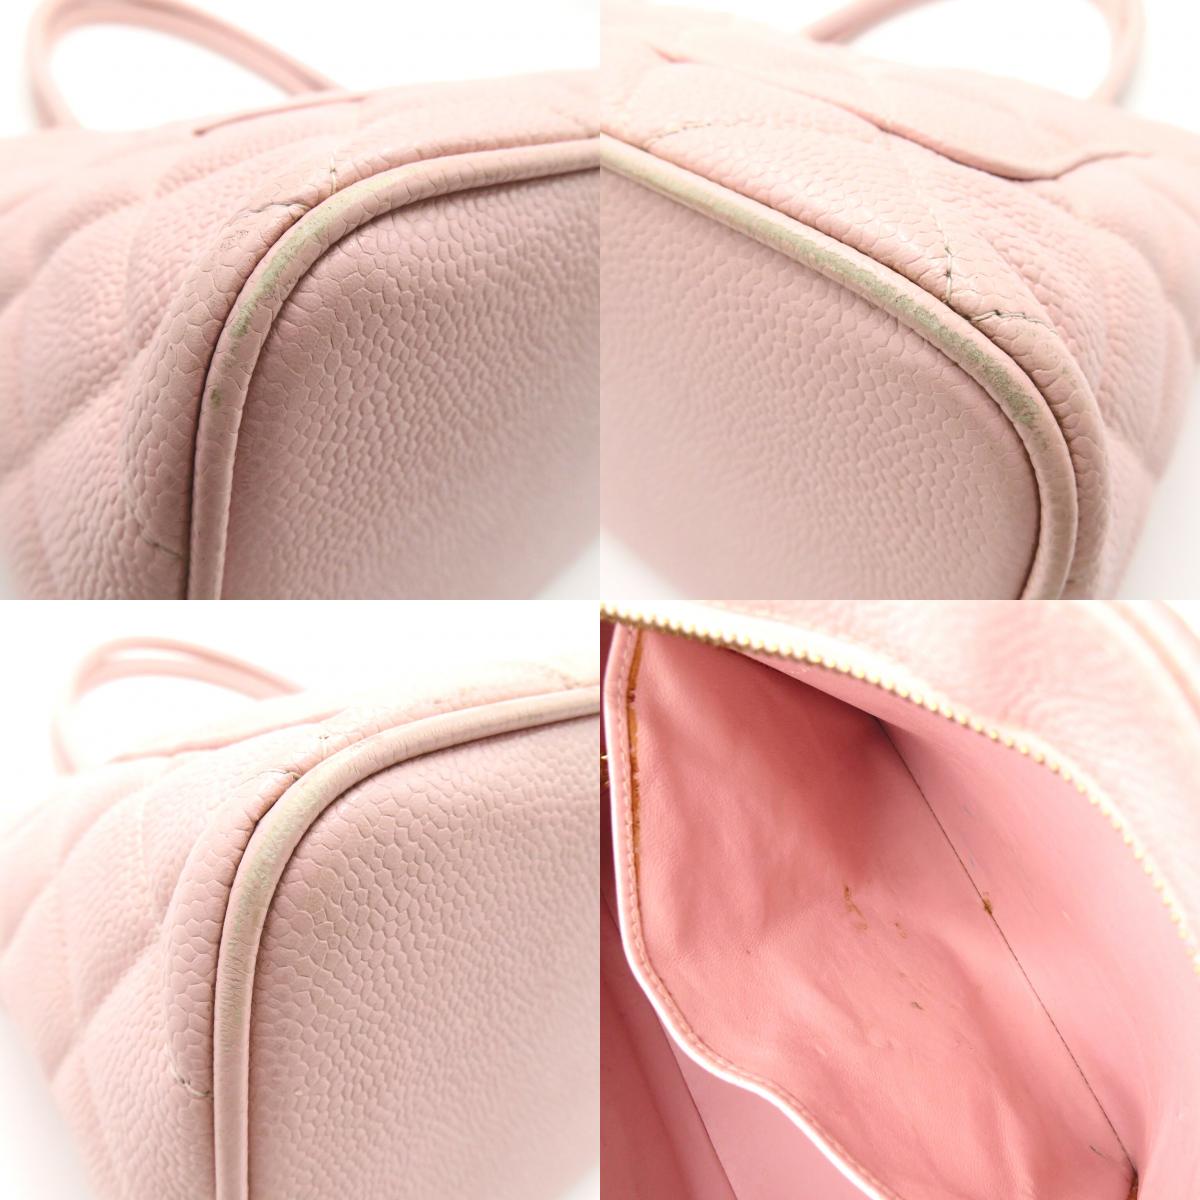 Chanel Redemption Tote Handbag Bag Caviar S (Green )  Pink